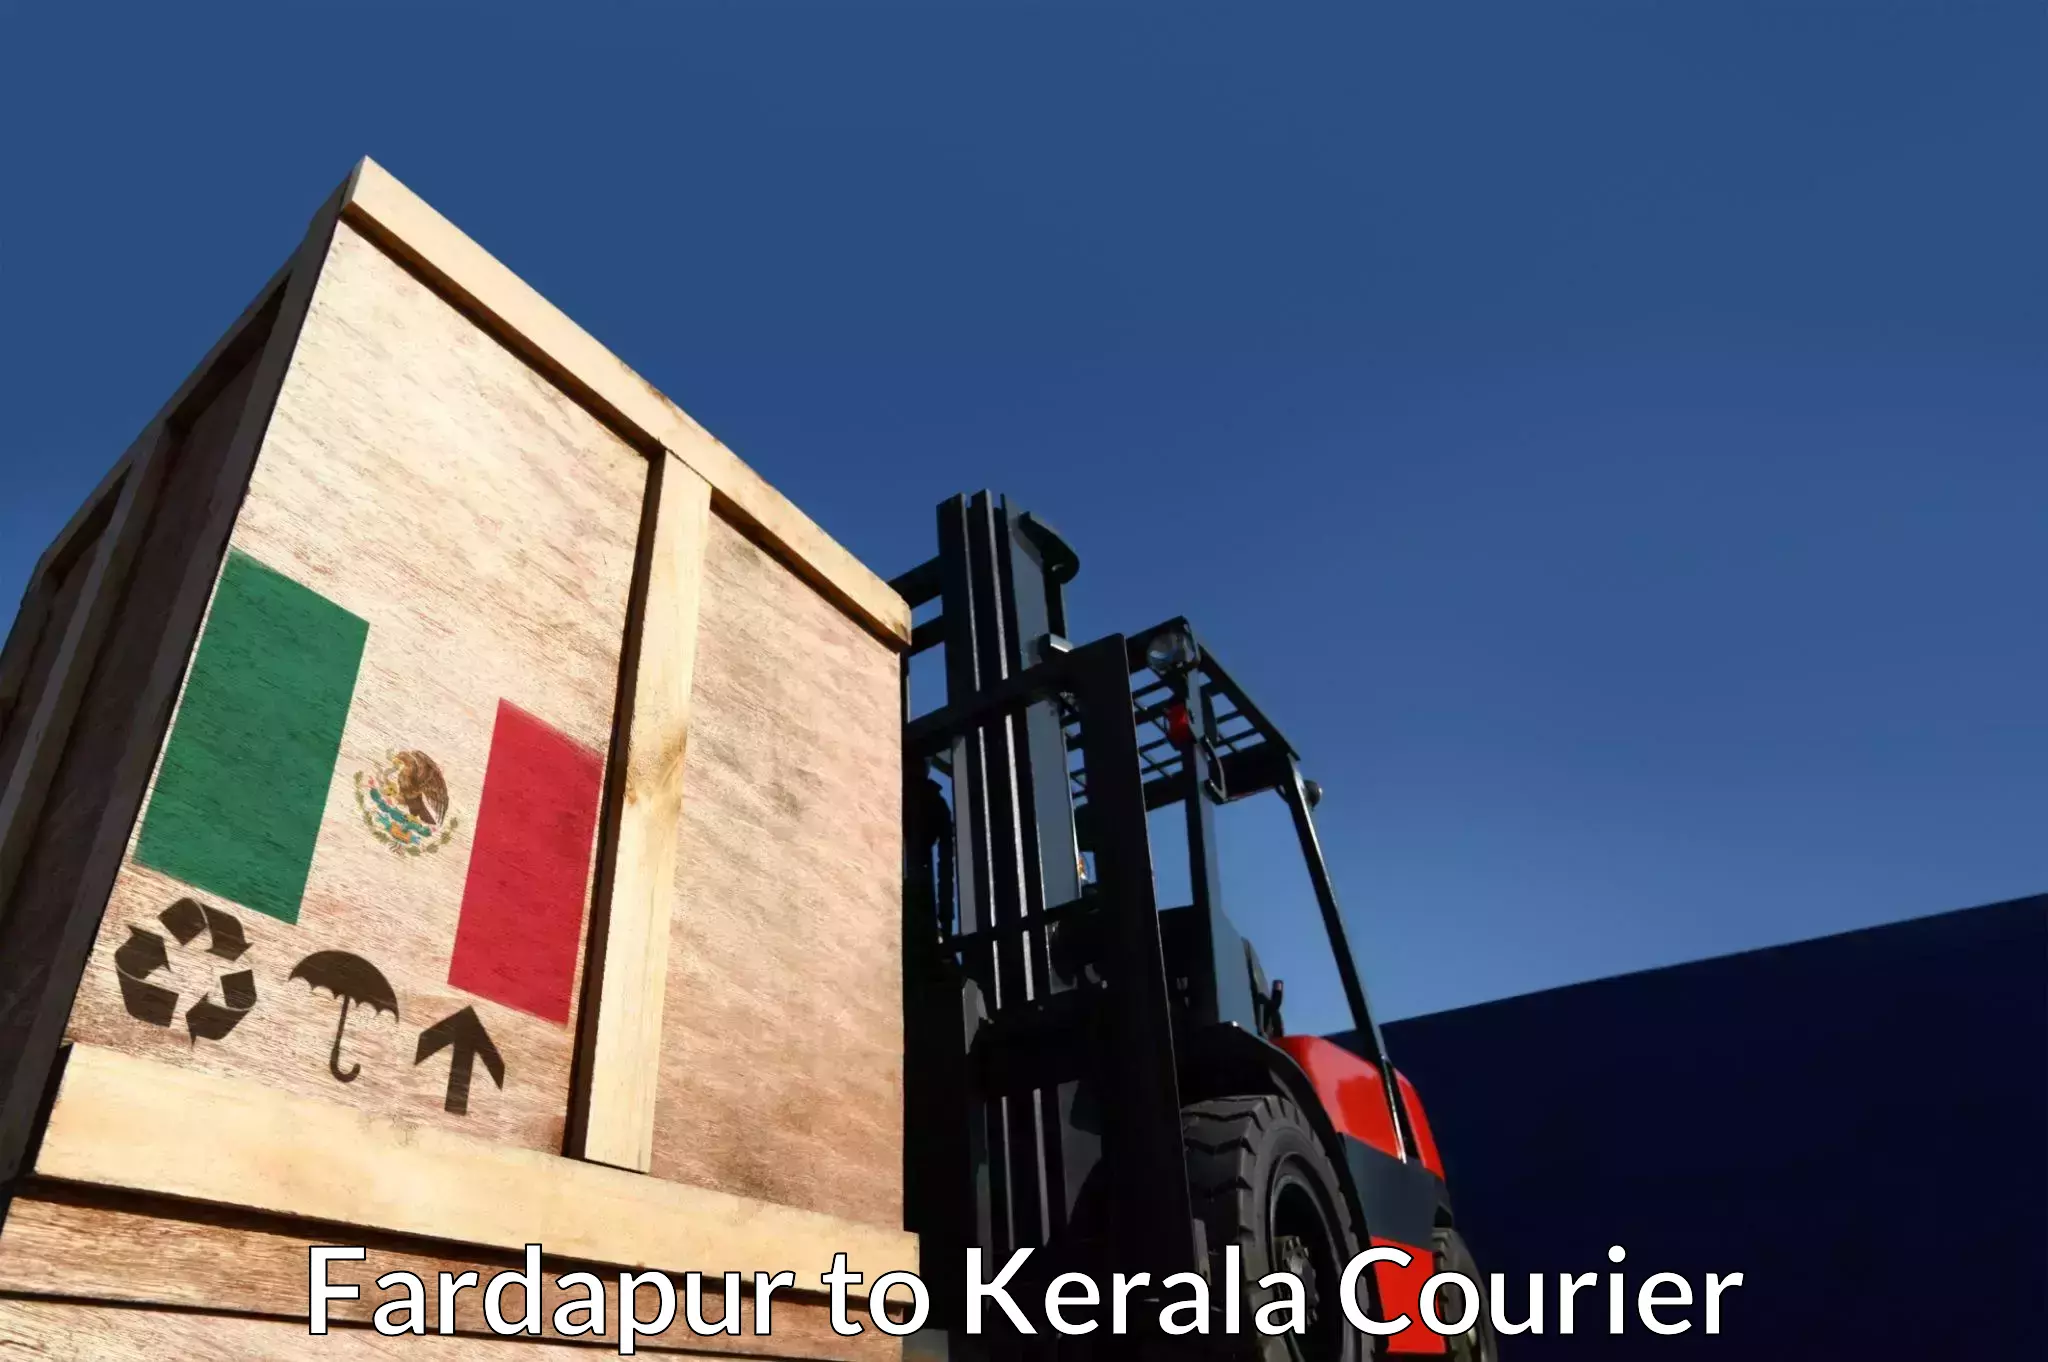 International courier networks Fardapur to Cochin Port Kochi